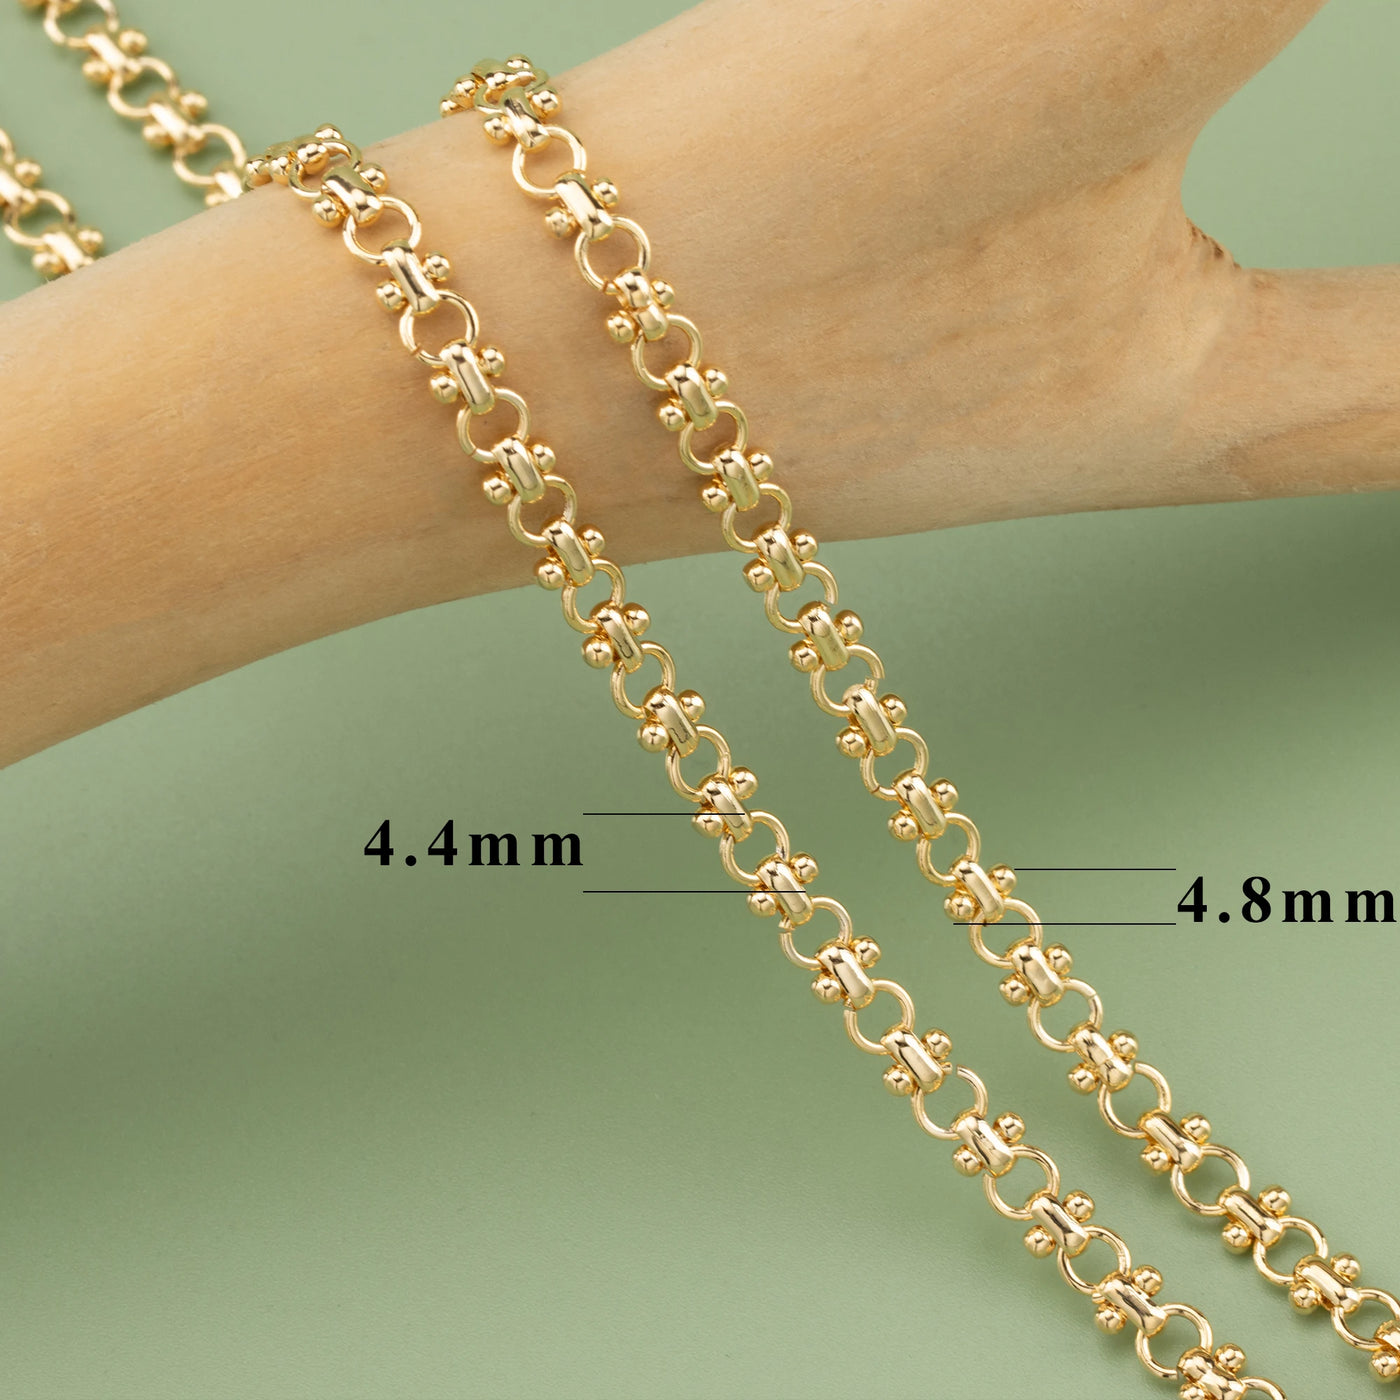 DIY Chain, 18K Gold Rhodium Plated, Nickel-Free - 1m/lot